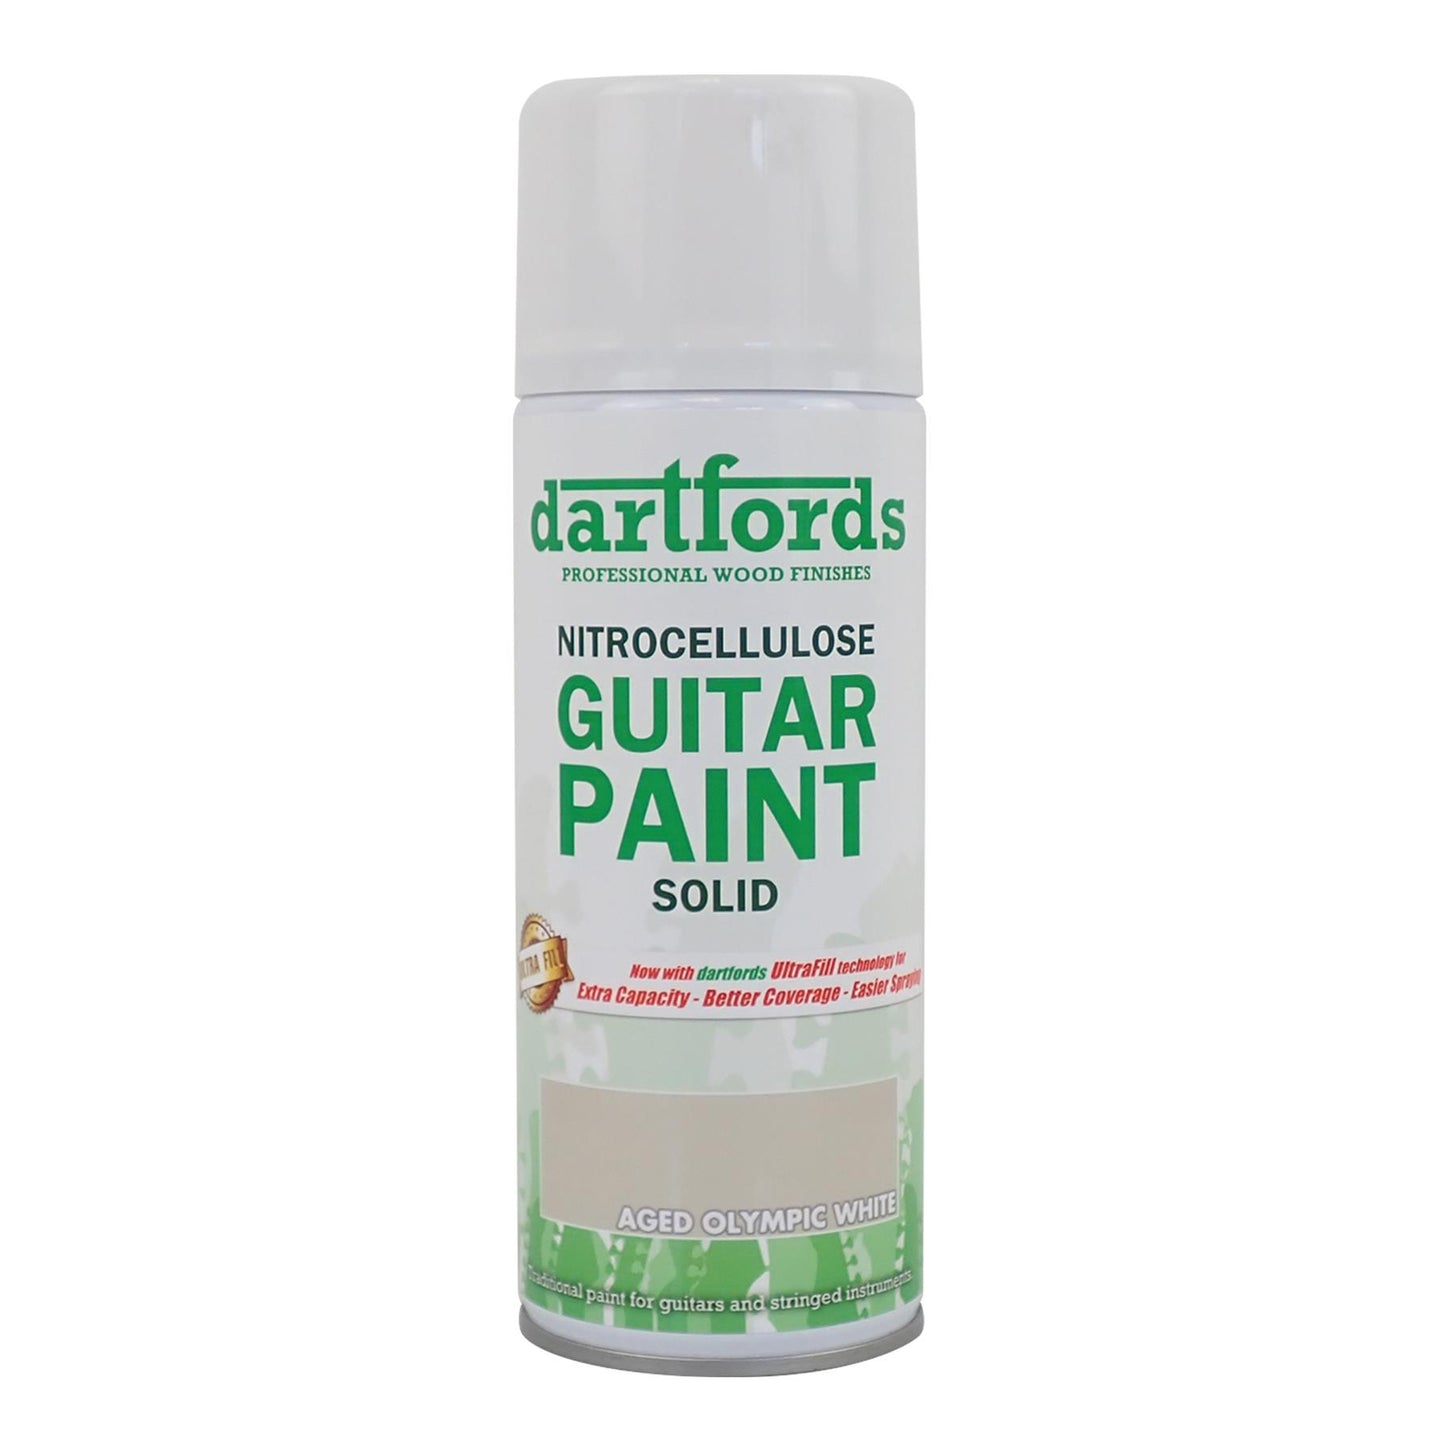 dartfords Aged Olympic White Nitrocellulose Guitar Paint - 400ml Aerosol